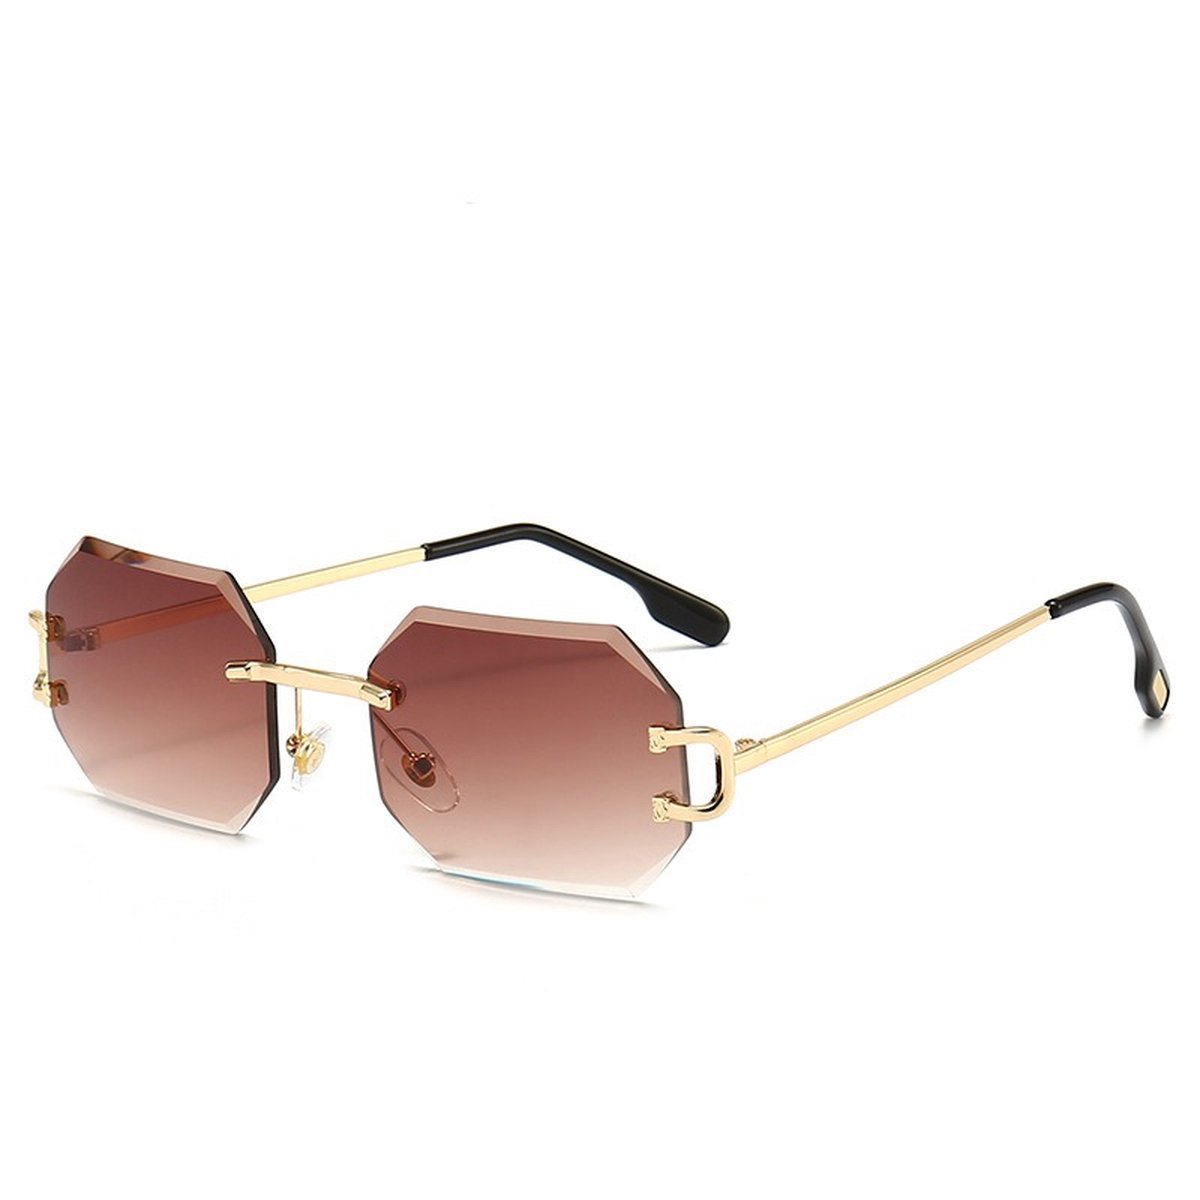 WiseGoods Premium Diamond Design Zonnebril - Zonnebrillen - Sunglasses - Zomer Brillen - Cadeau - Bril Dames & Heren - Bruin